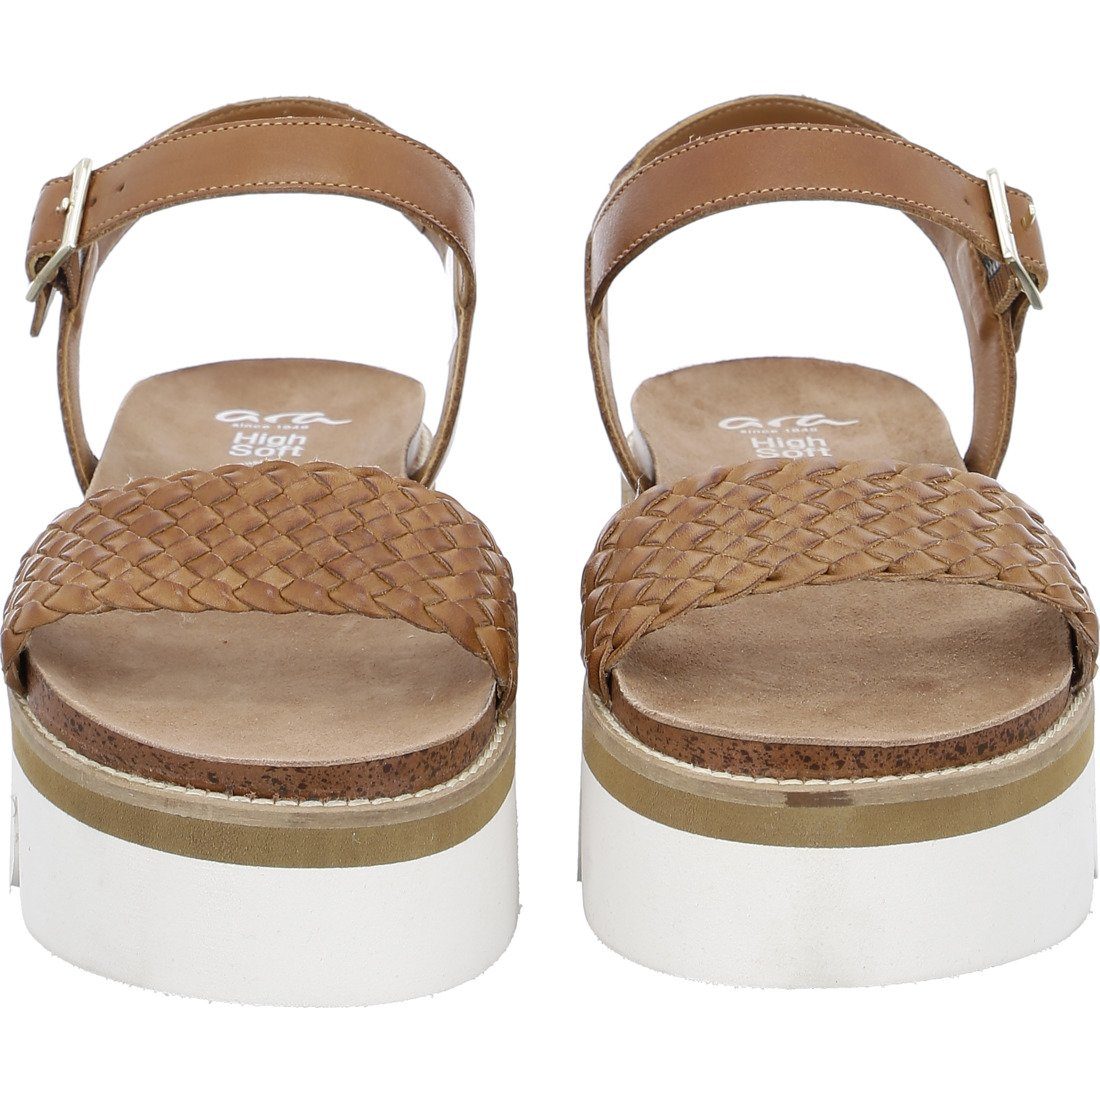 Ara Ara Schuhe, Sandalette Florenz 044881 braun Sandalette Glattleder 